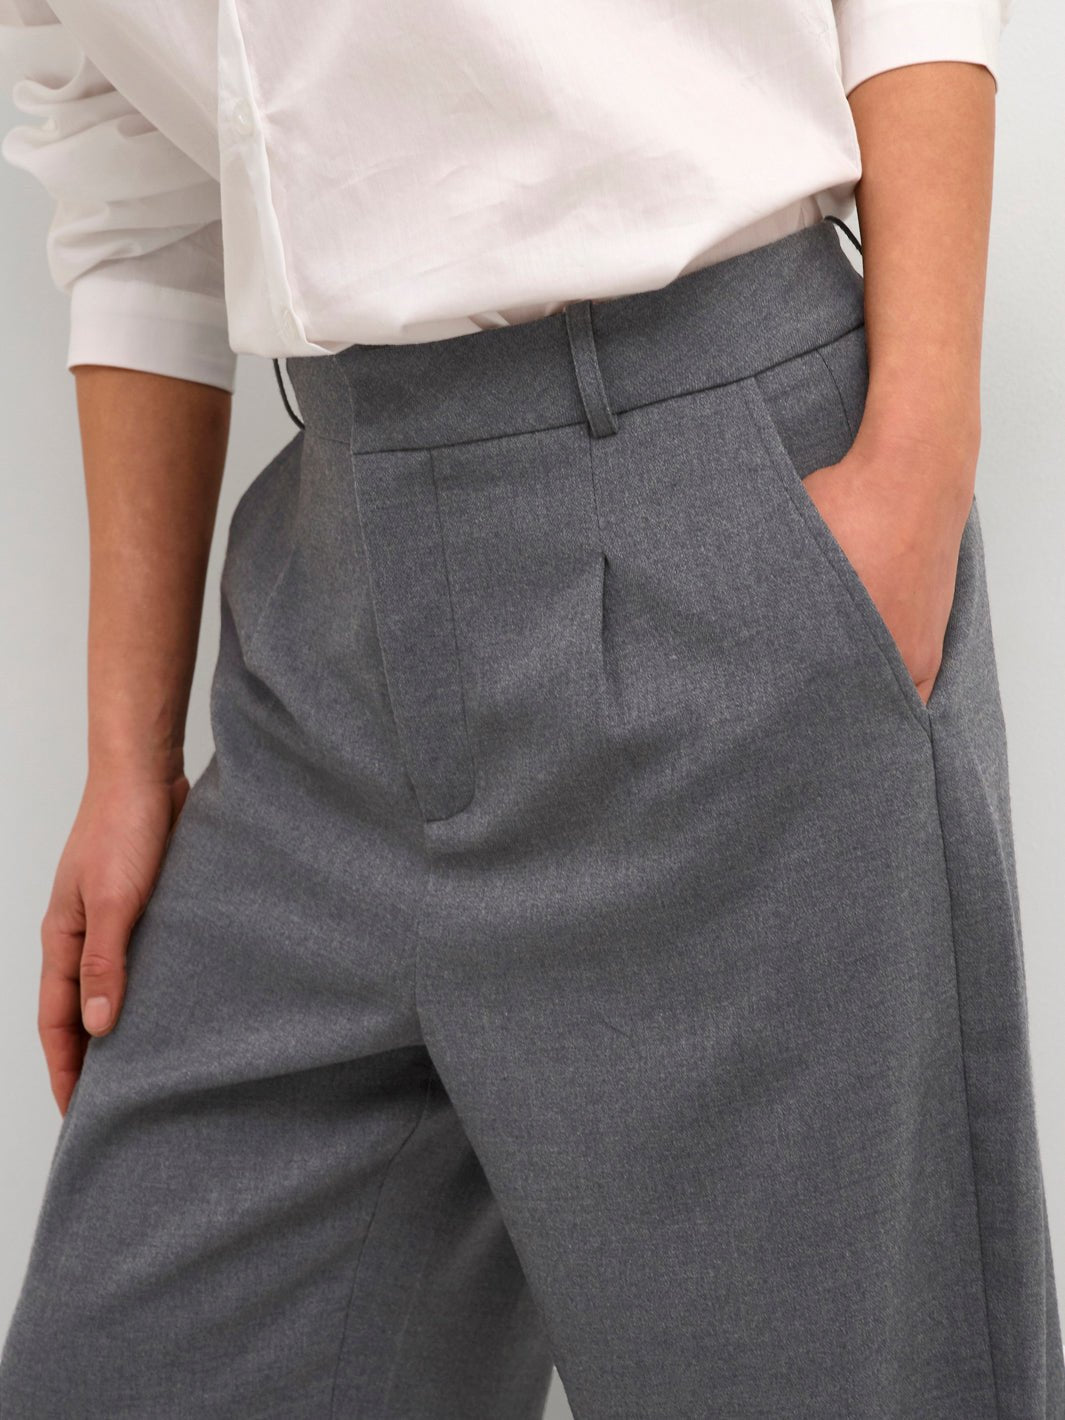 Kaffe KAmerle pants suiting dark grey melange - Online-Mode